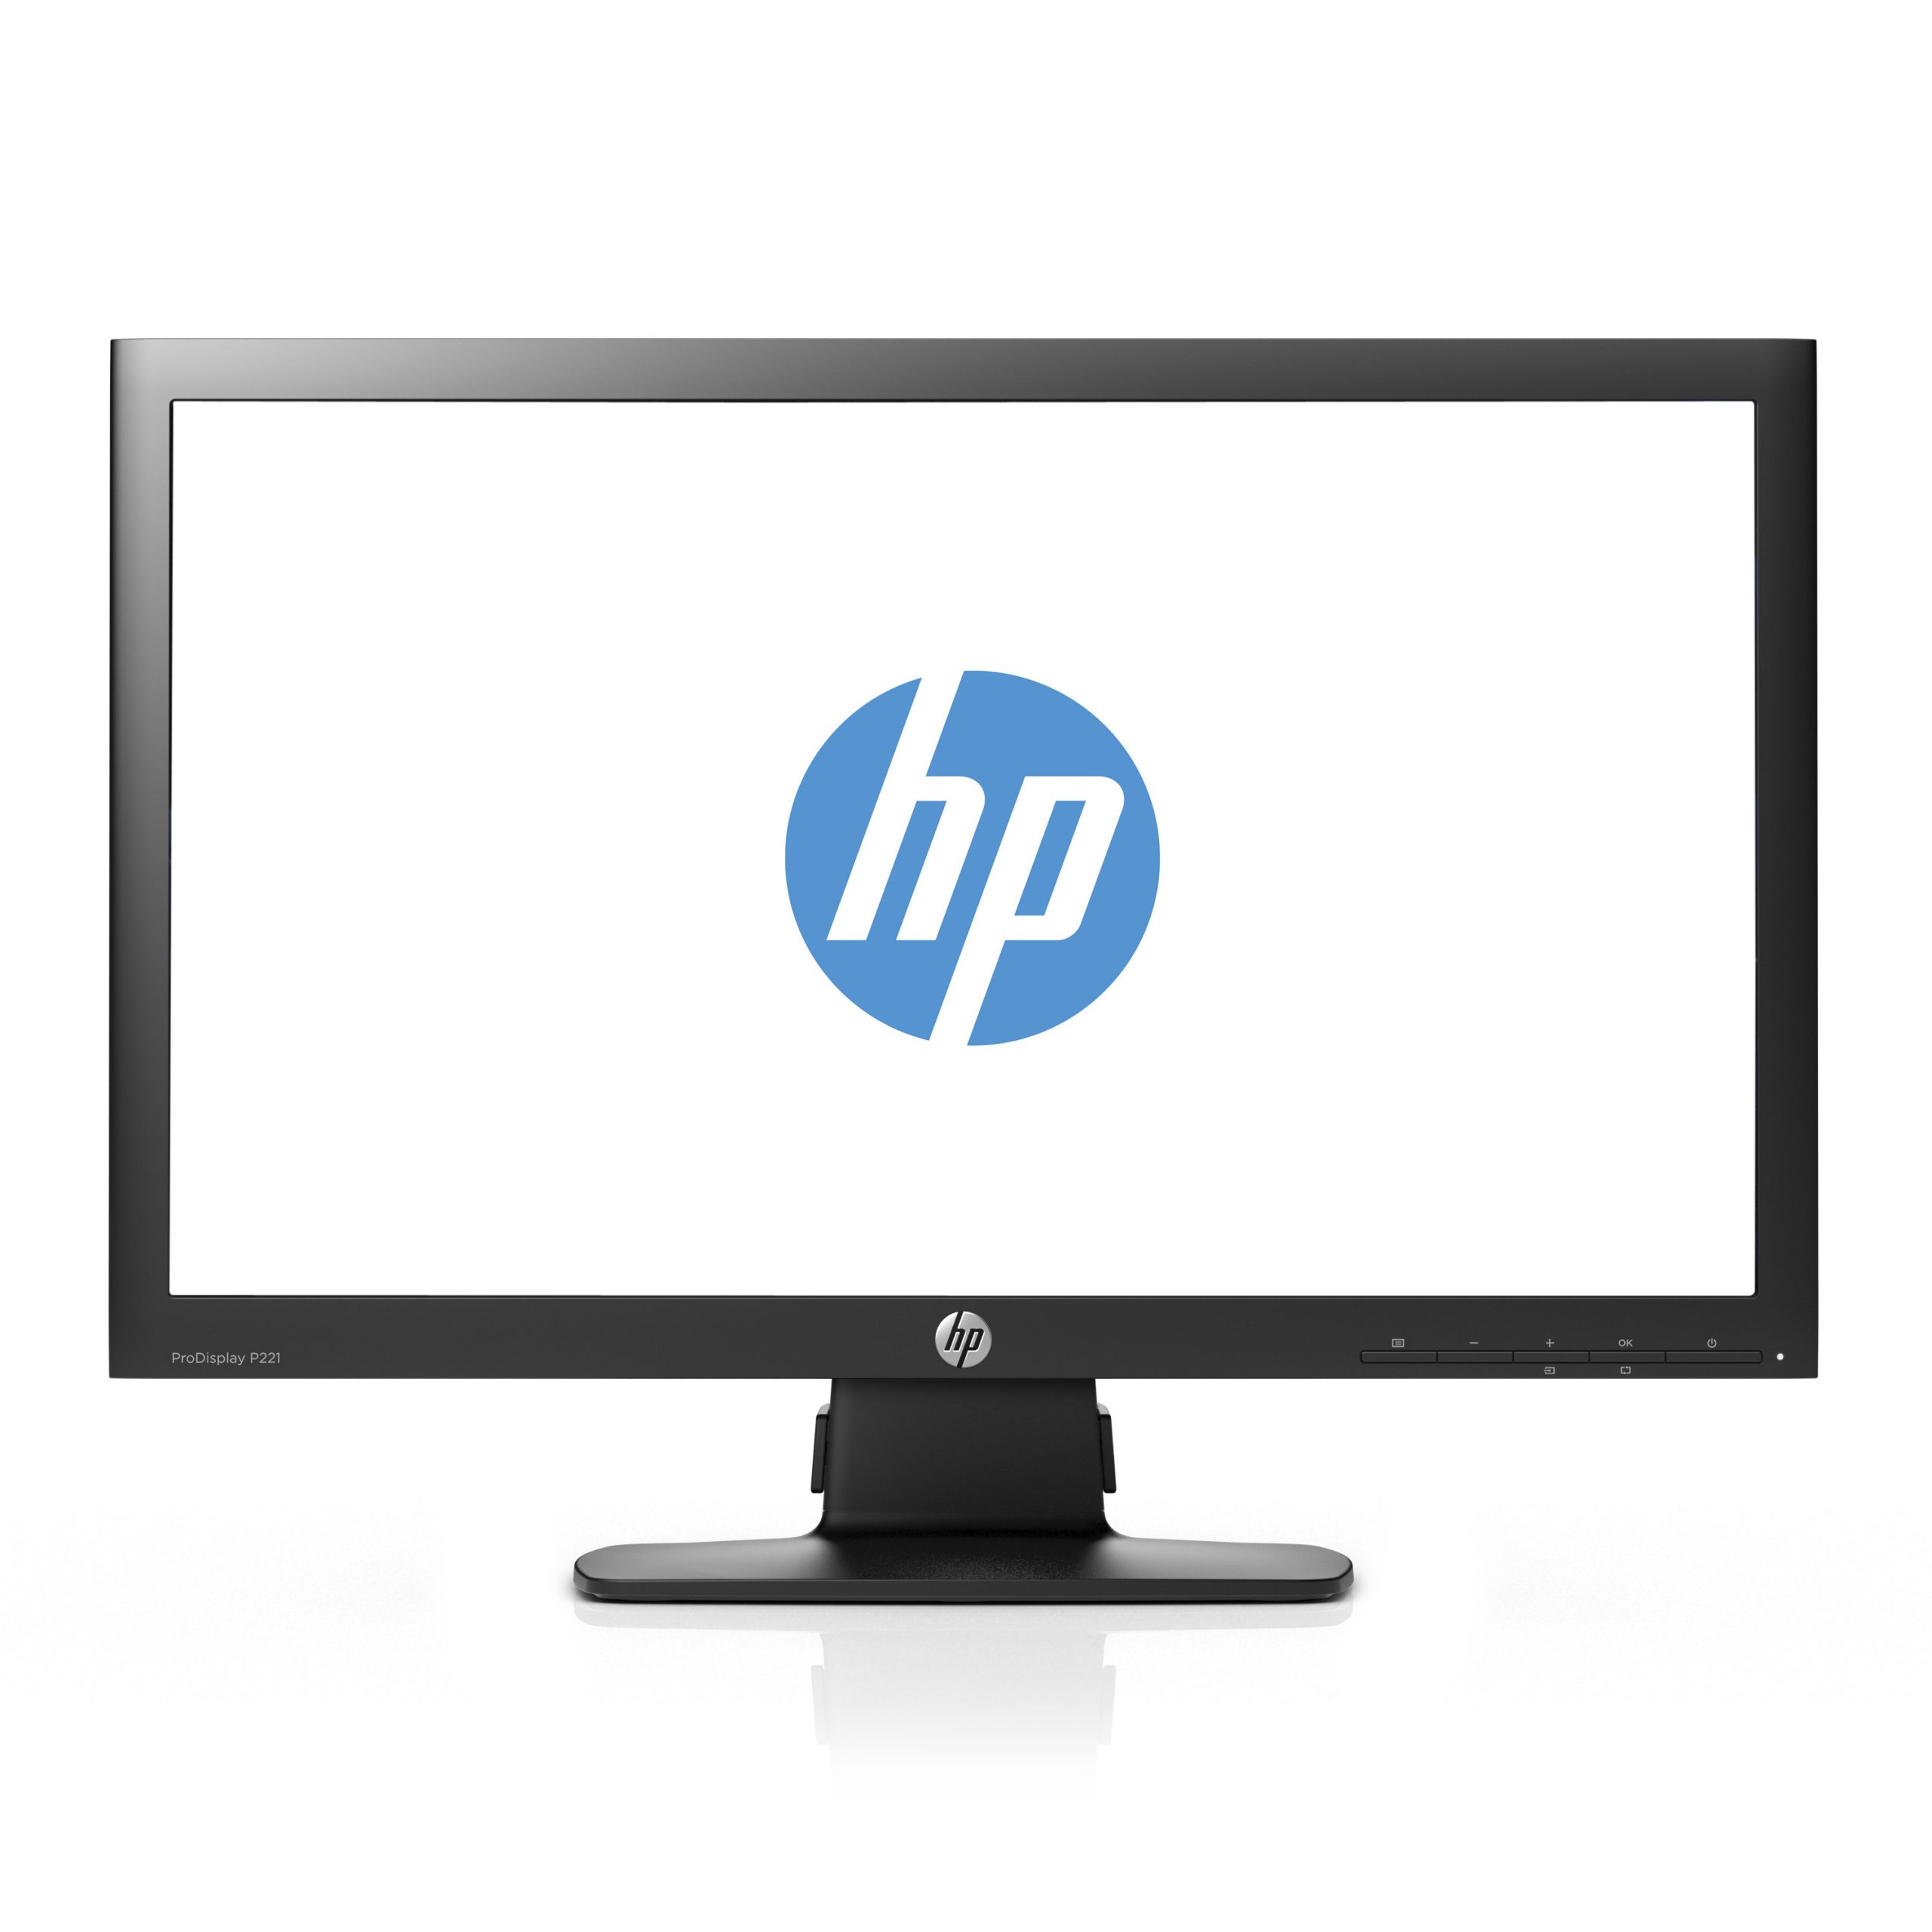 HP ProDisplay P221 LED-Monitor 21,5 Zoll, 1920 x 1080 Pixel, FullHD 16:9, Kontrast 1000:1, Helligkeit 250 cd/m², Reaktionszeit 5 ms